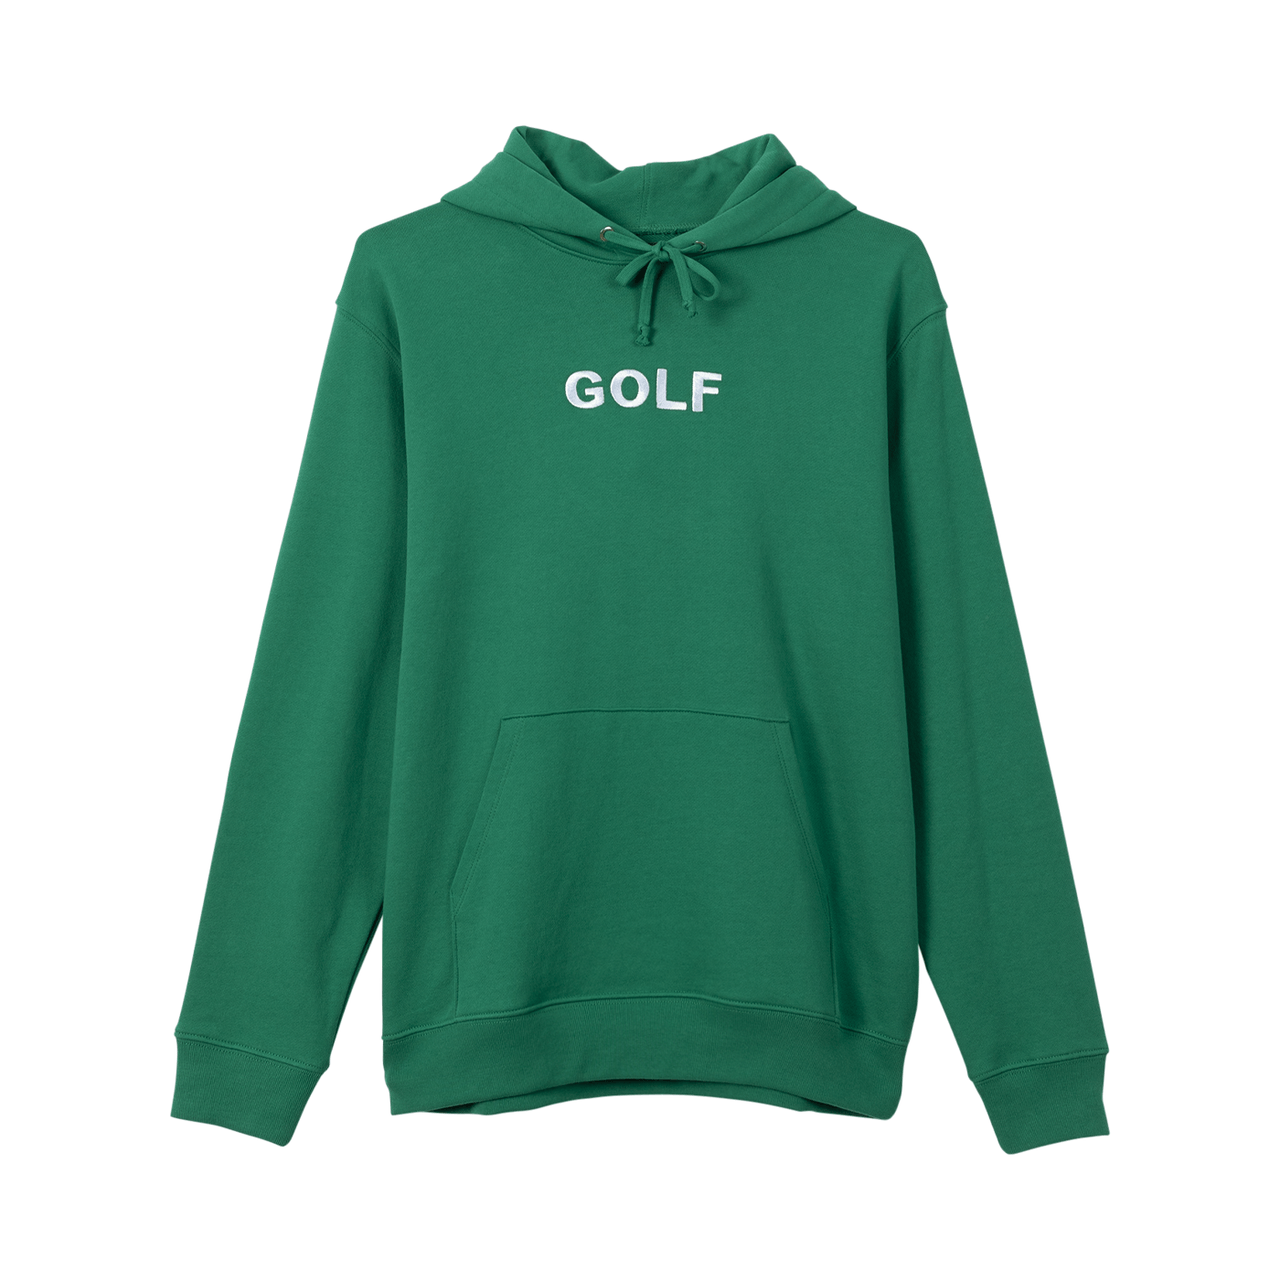 Golf Wang Logo - GOLF LOGO EMBROIDERED HOODIE - GREEN by GOLF WANG - GOLF WANG